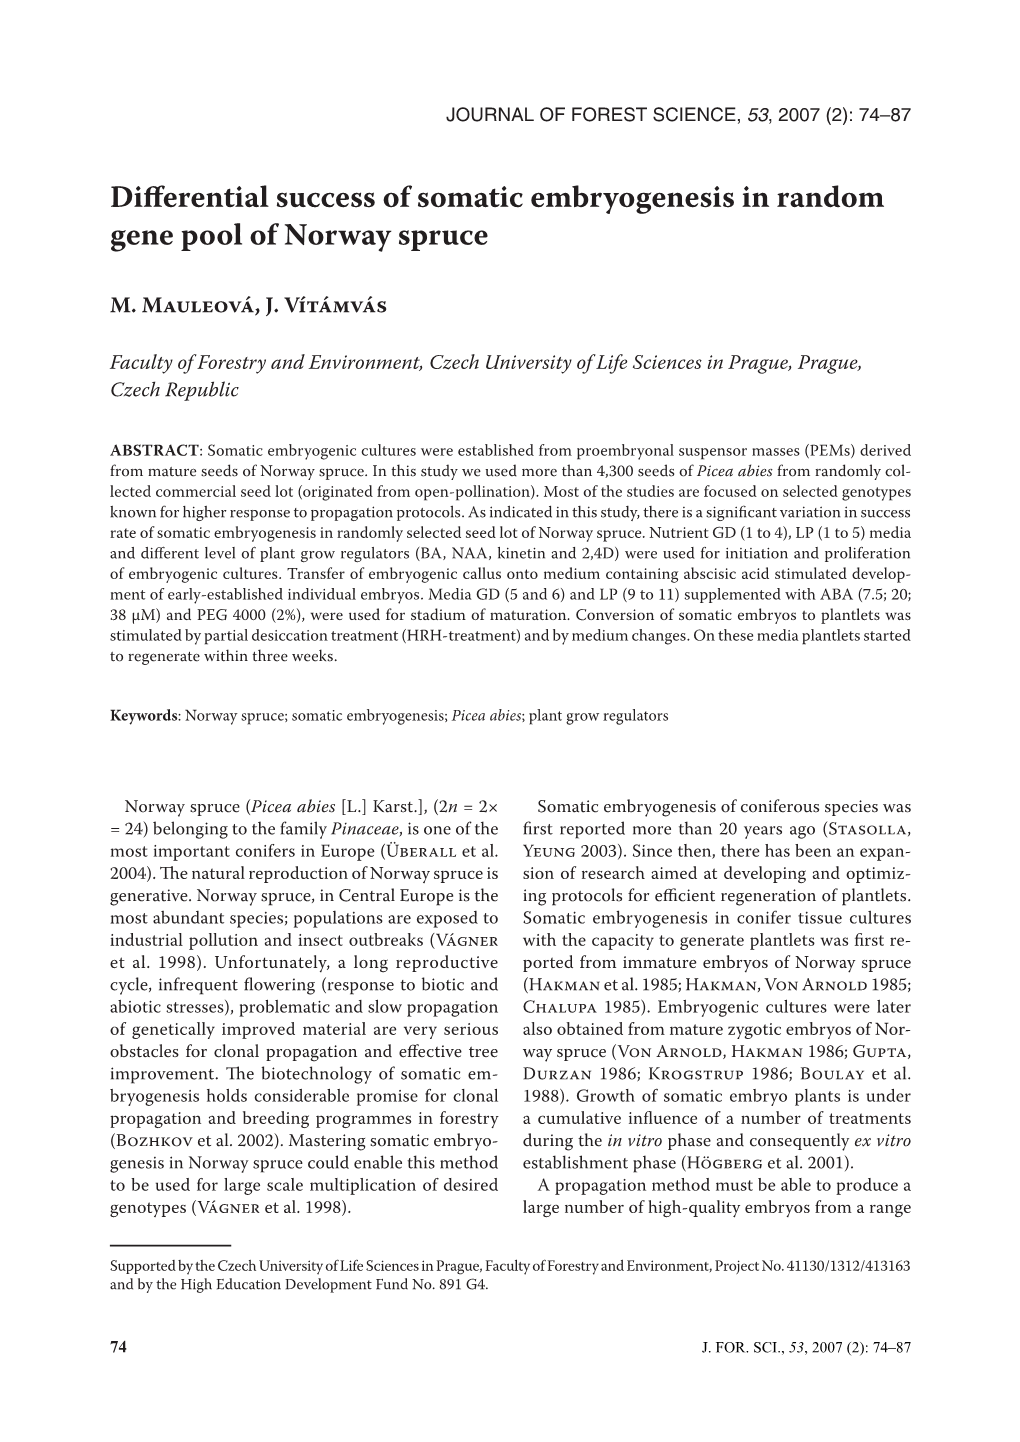 Differential Success of Somatic Embryogenesis in Random Gene Pool of Norway Spruce